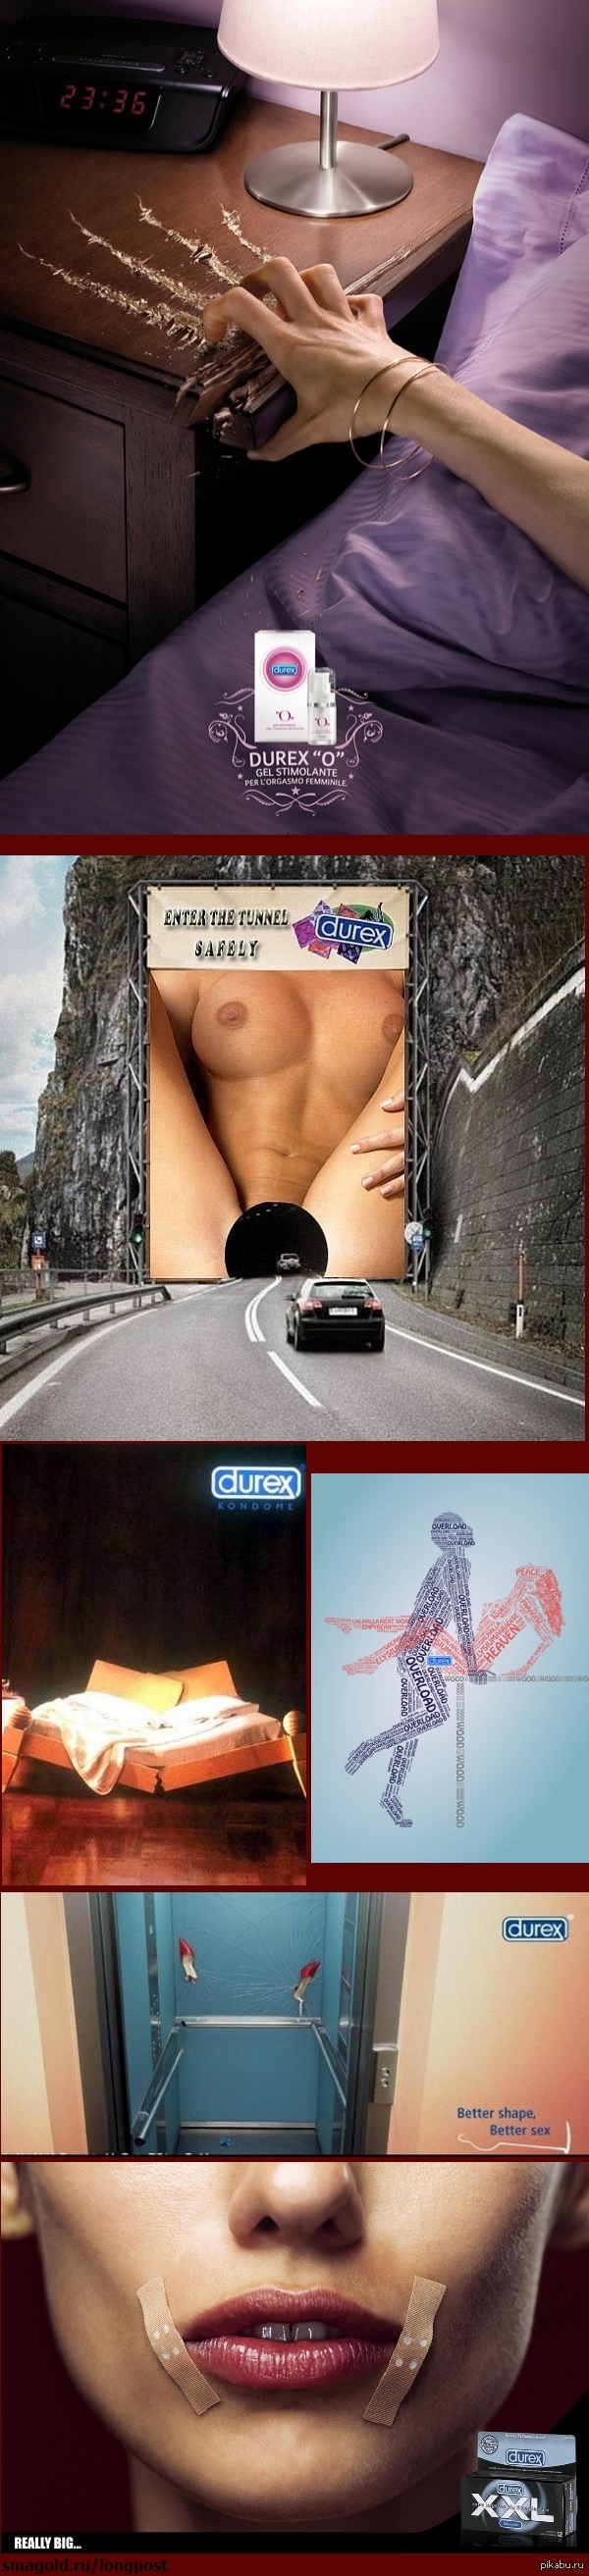 Interesting fuse advertisement :) - NSFW, Condom, Durex, Rubber, Longpost, Condoms